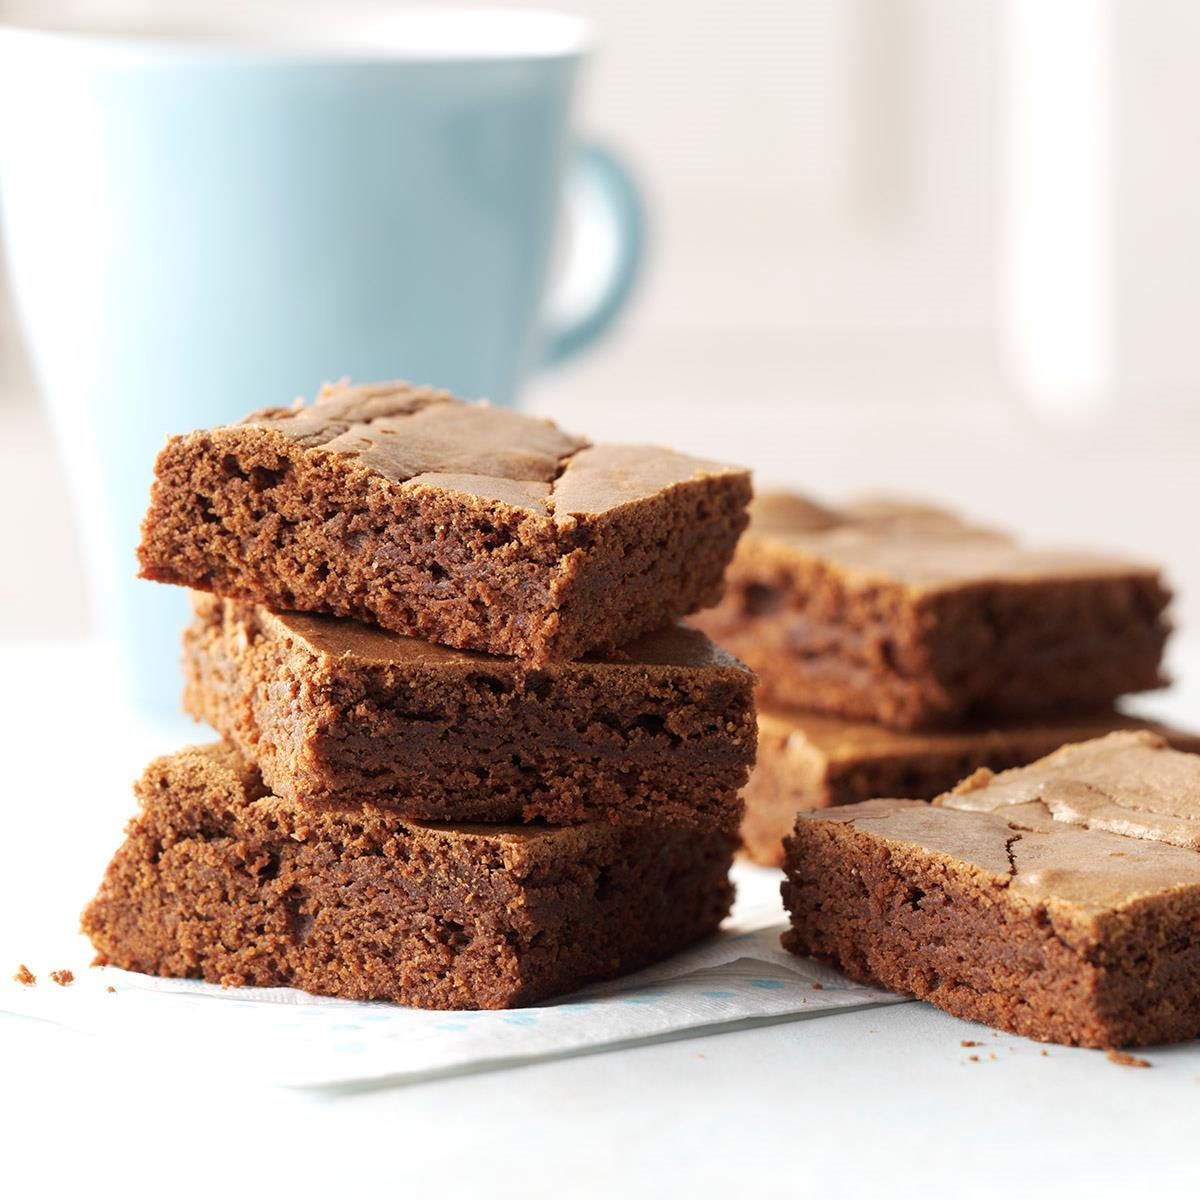 Tasty - 😋 A Baker's Edge brownie pan because everyone